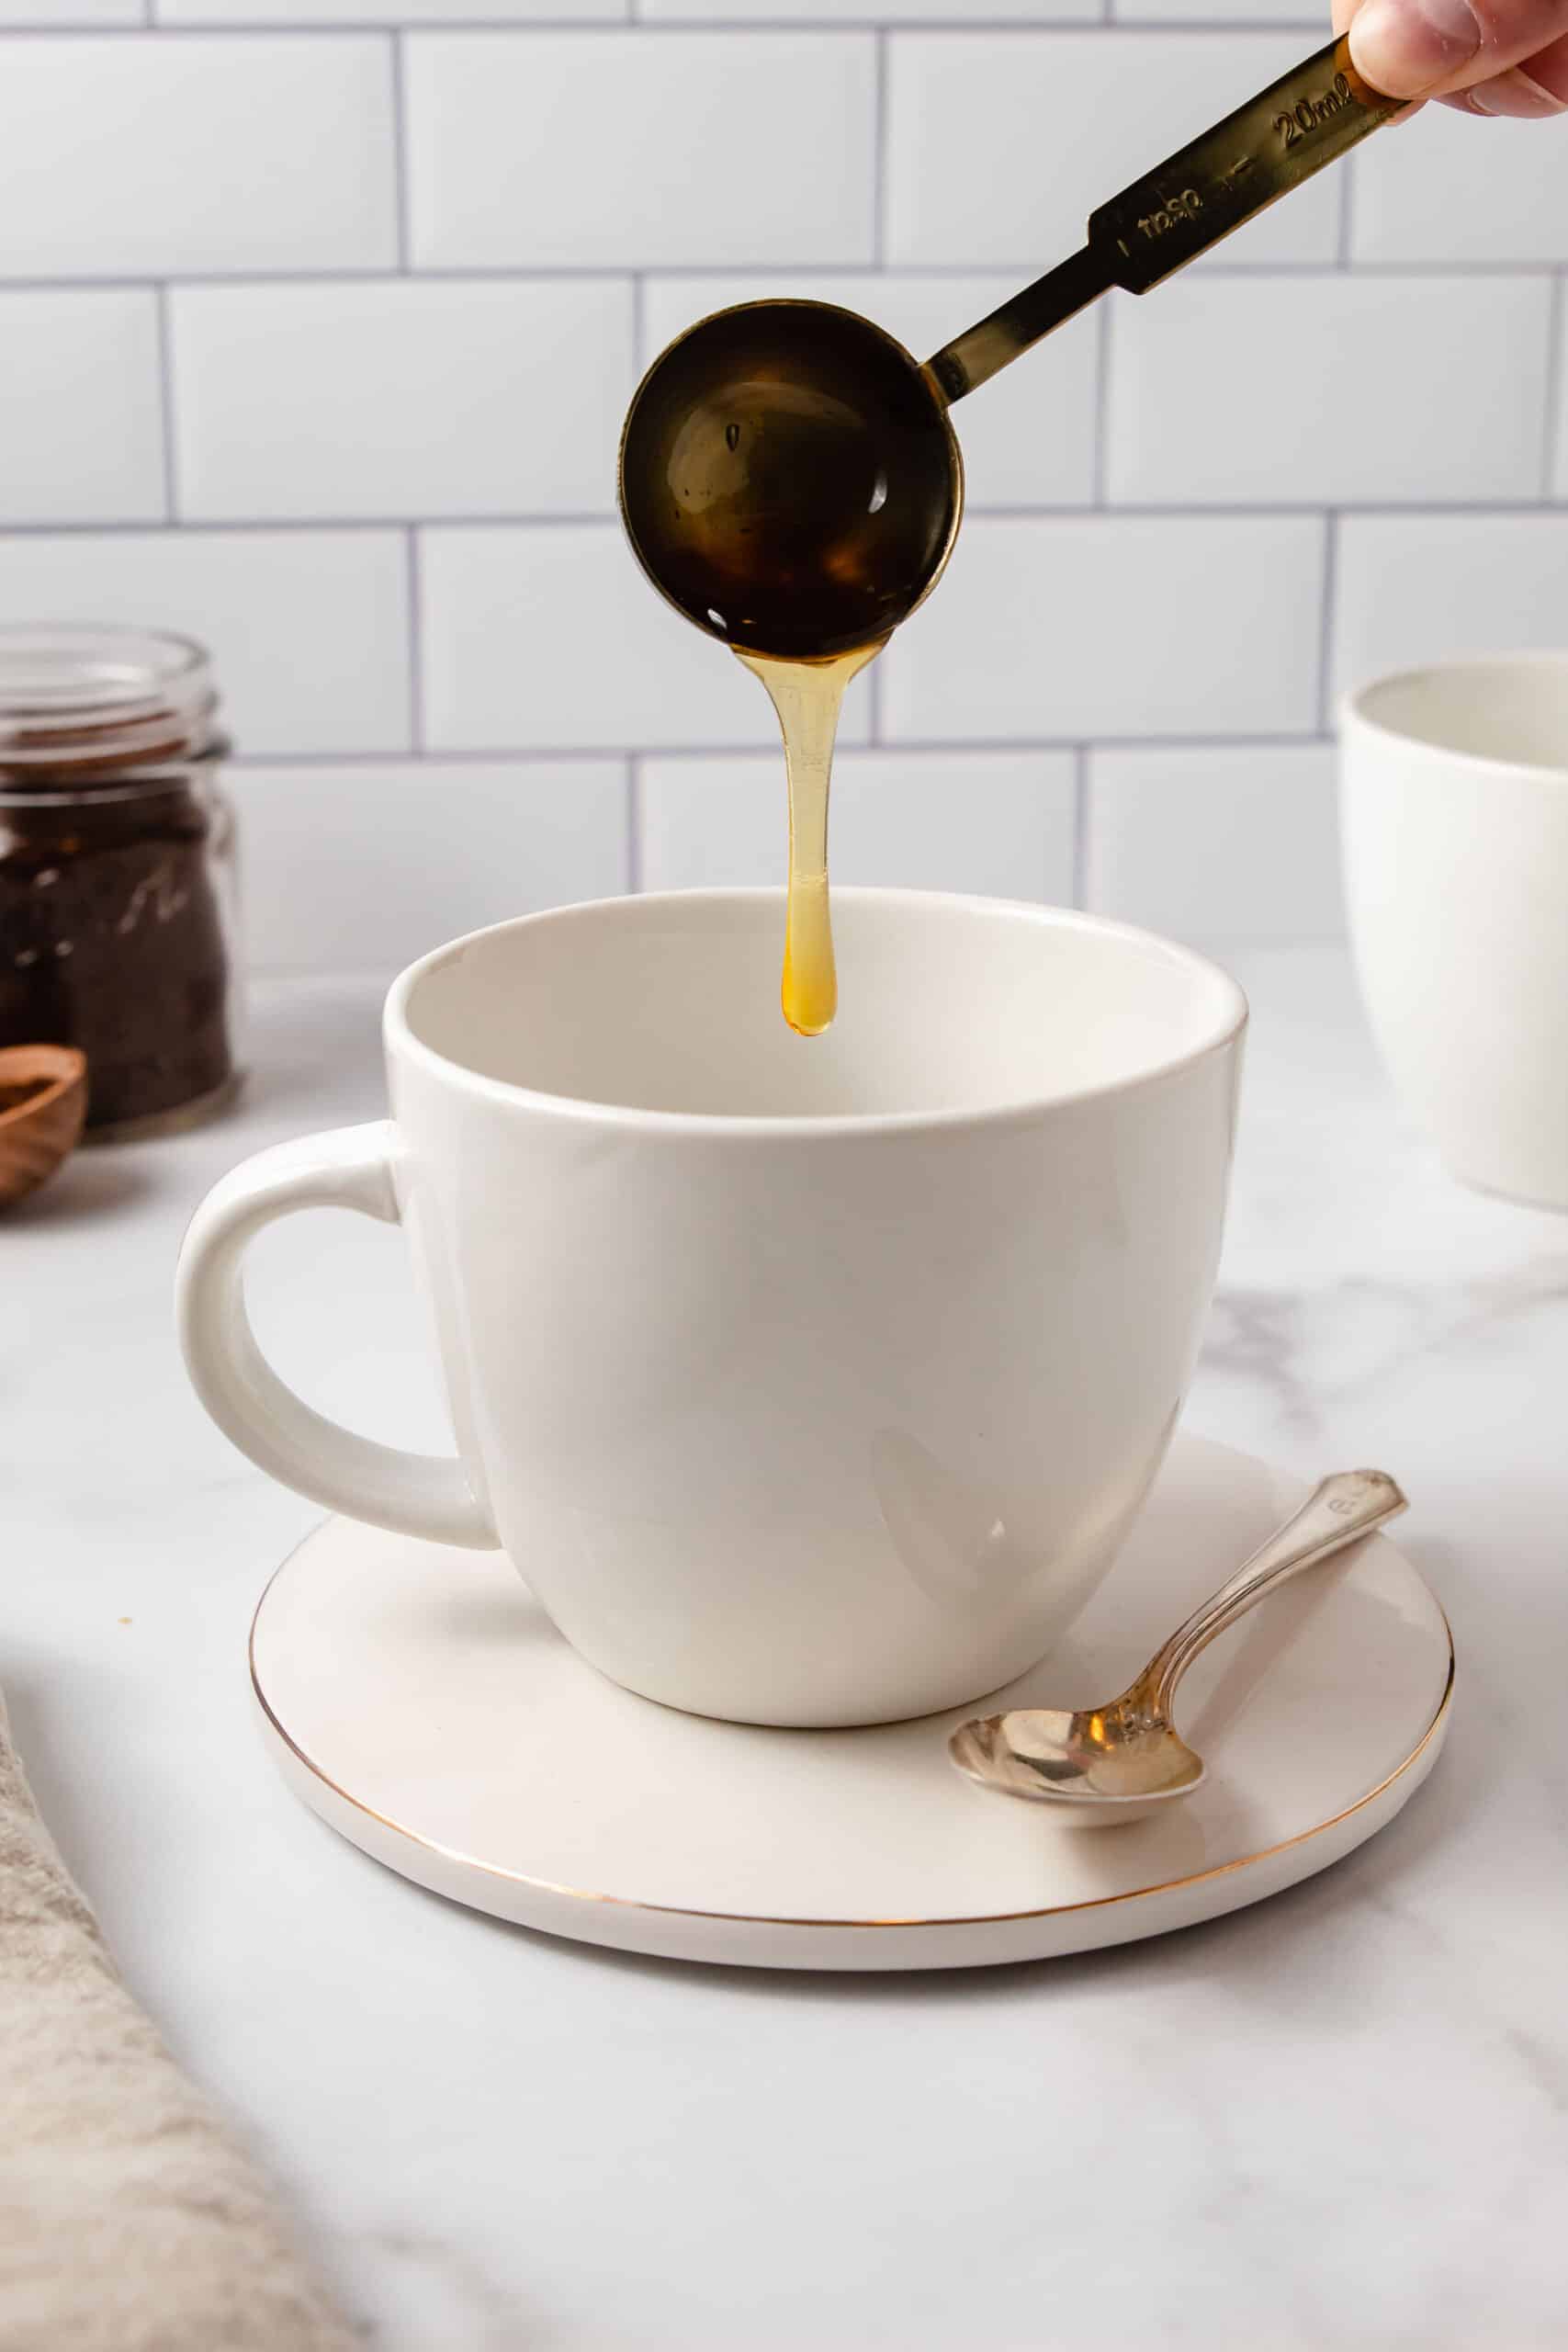 A hand dripping honey into a coffee mug.